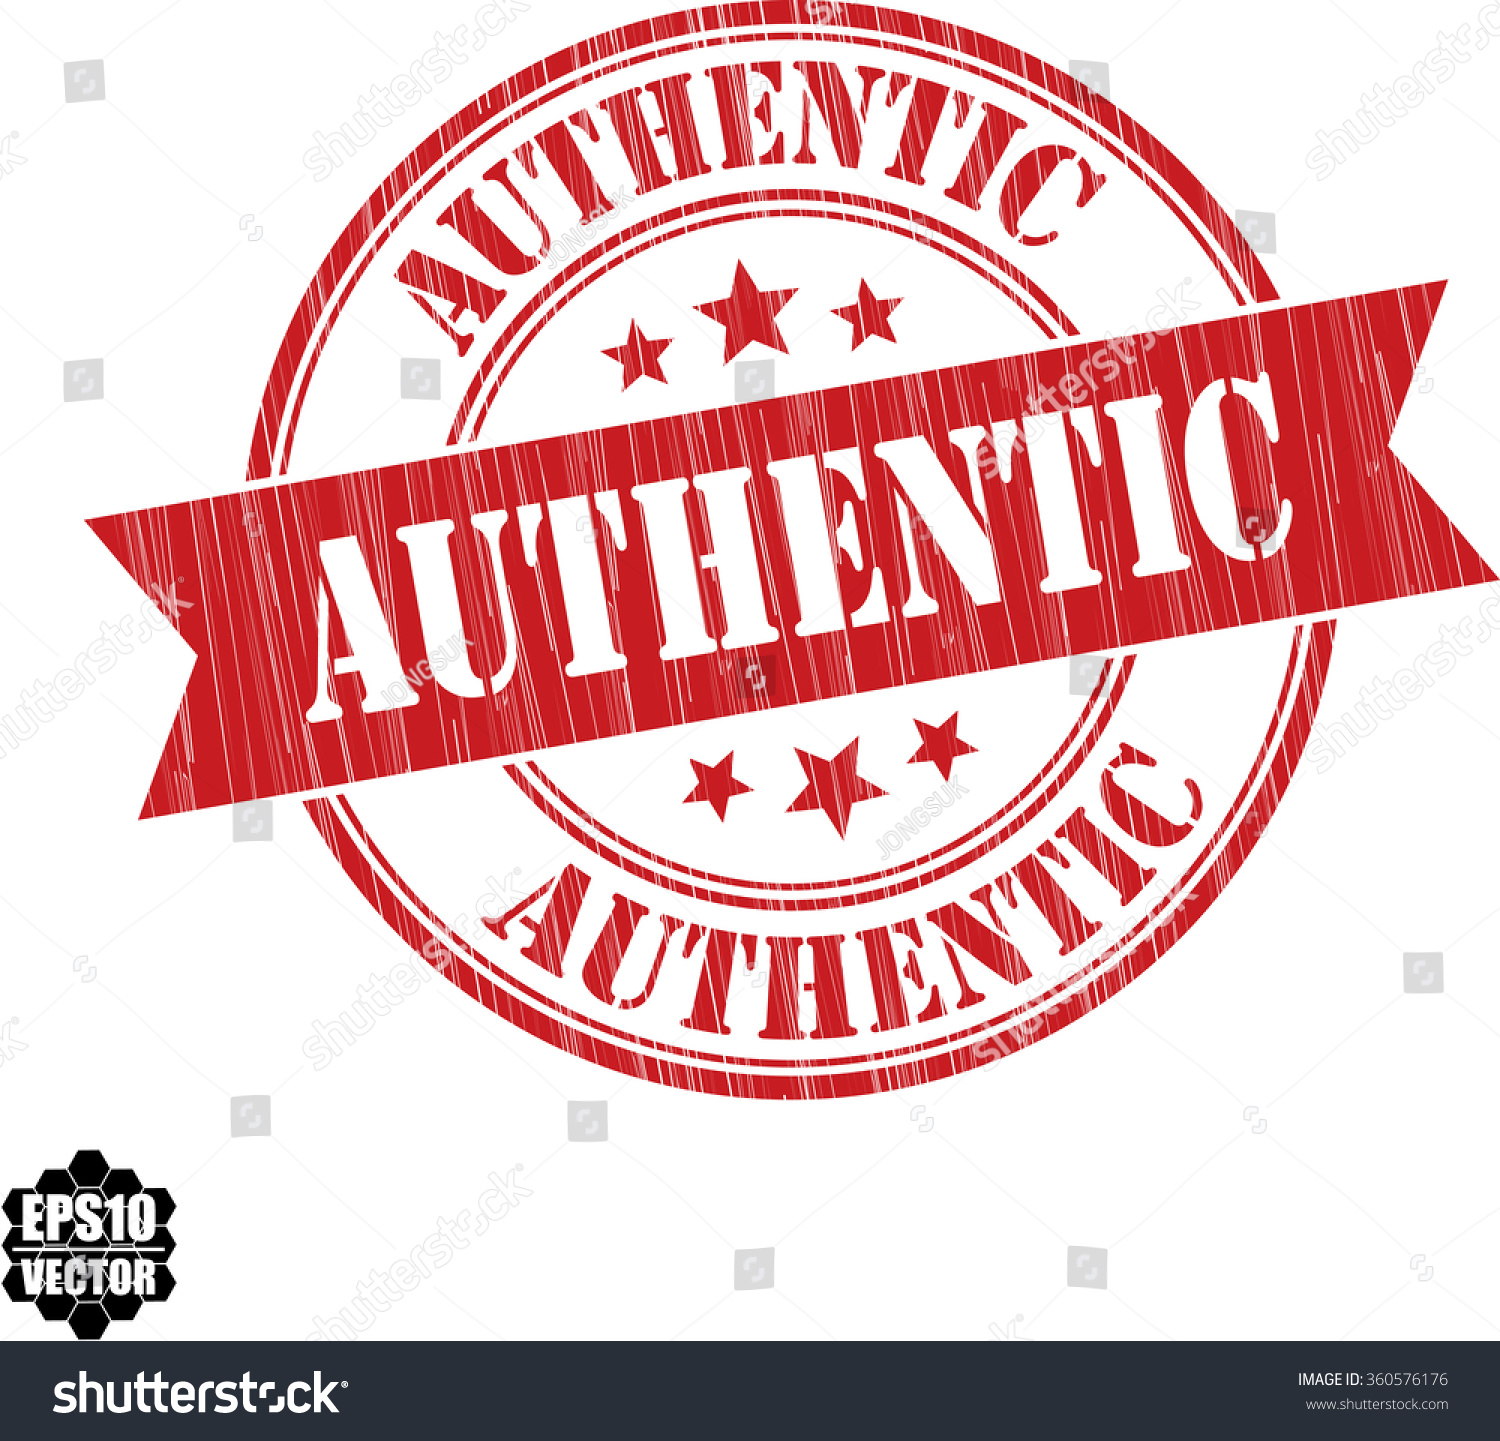 Authentic Grunge Stamp.Vector. - 360576176 : Shutterstock